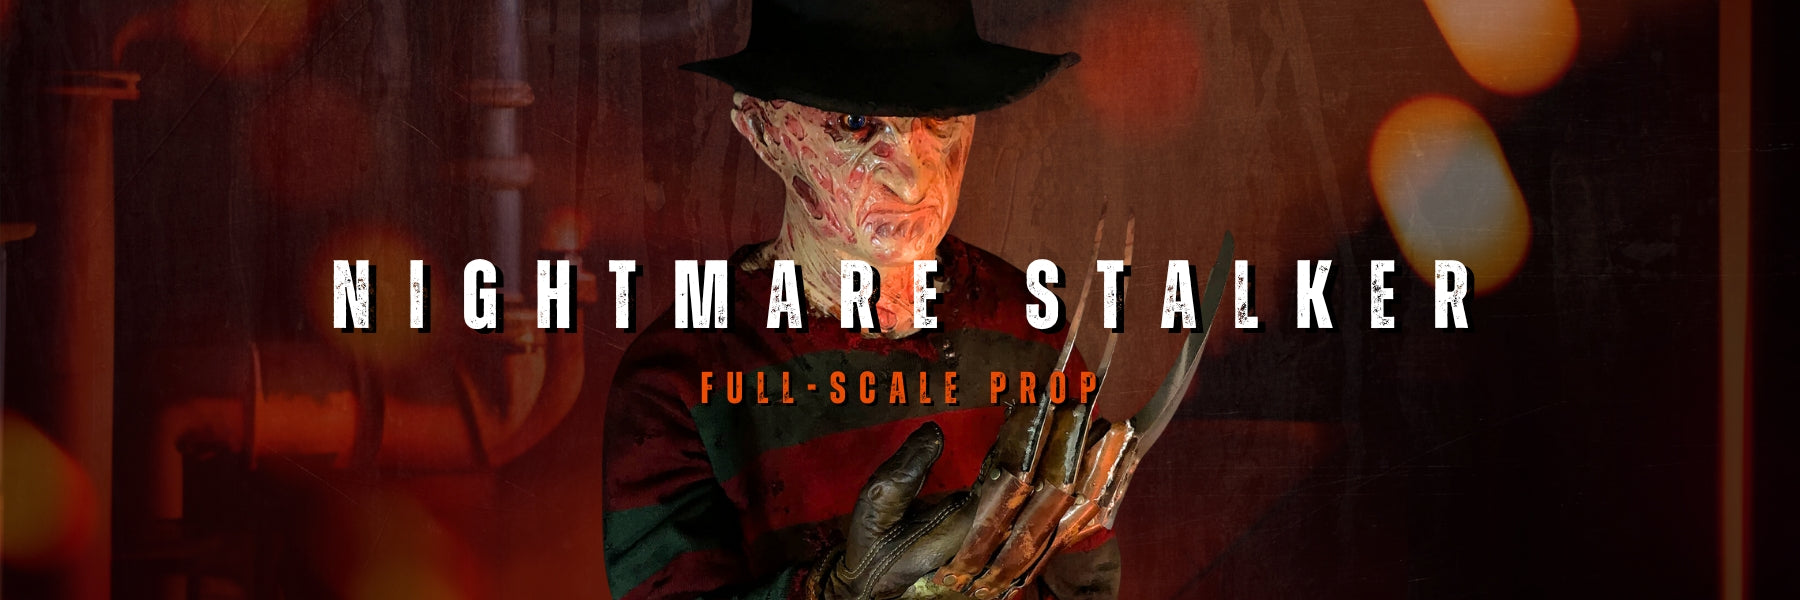 Nightmare Stalker Full-Scale Prop